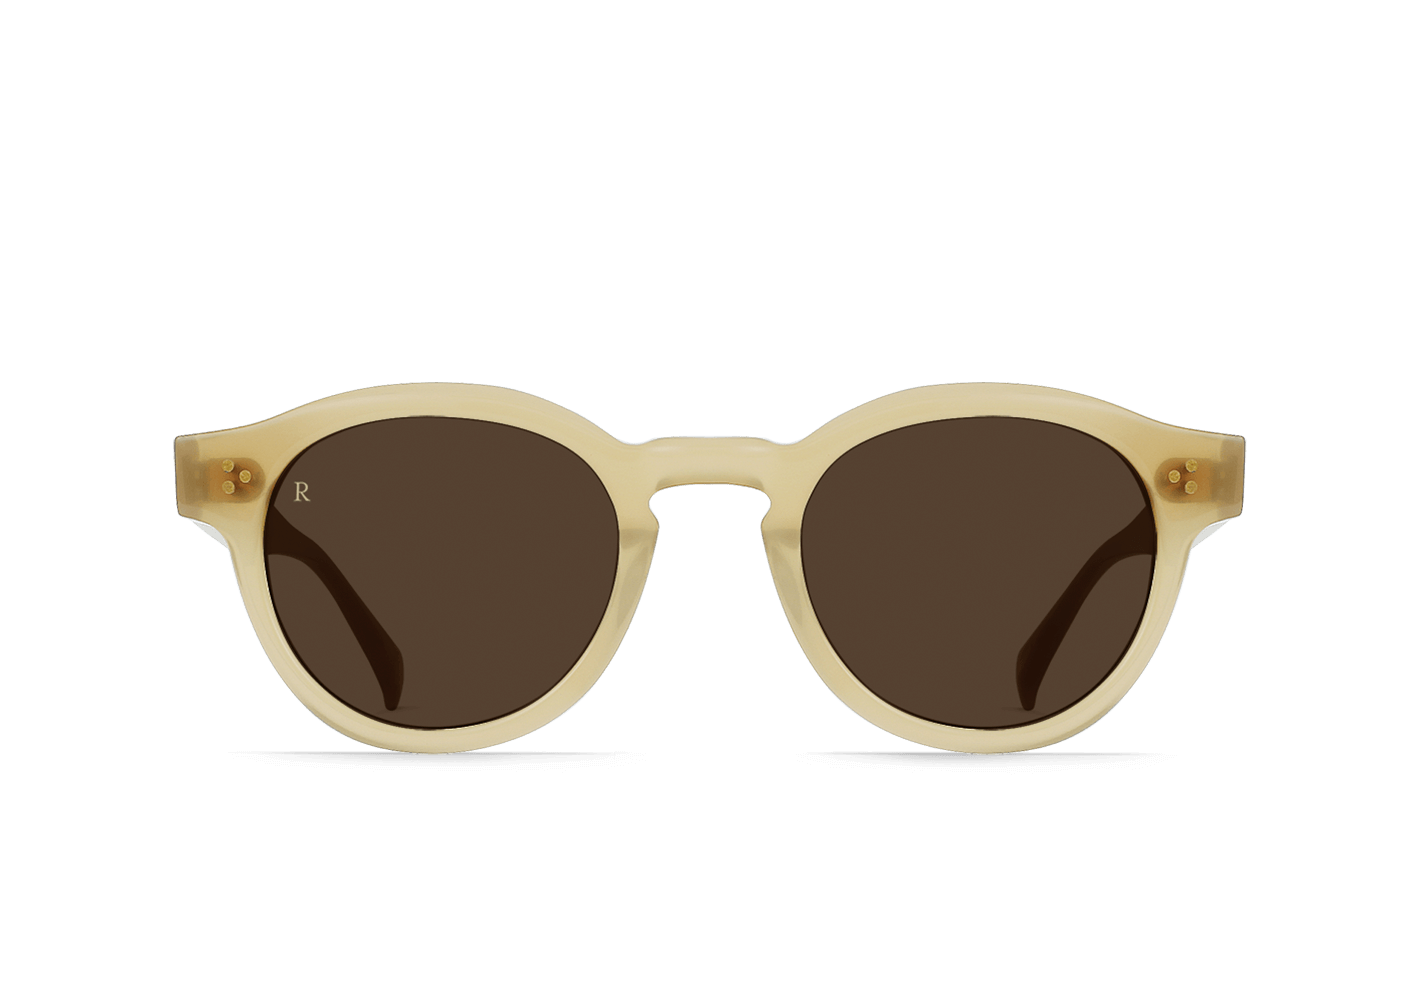 RAEN Zelti Sunglasses in Villa / Vibrant Brown